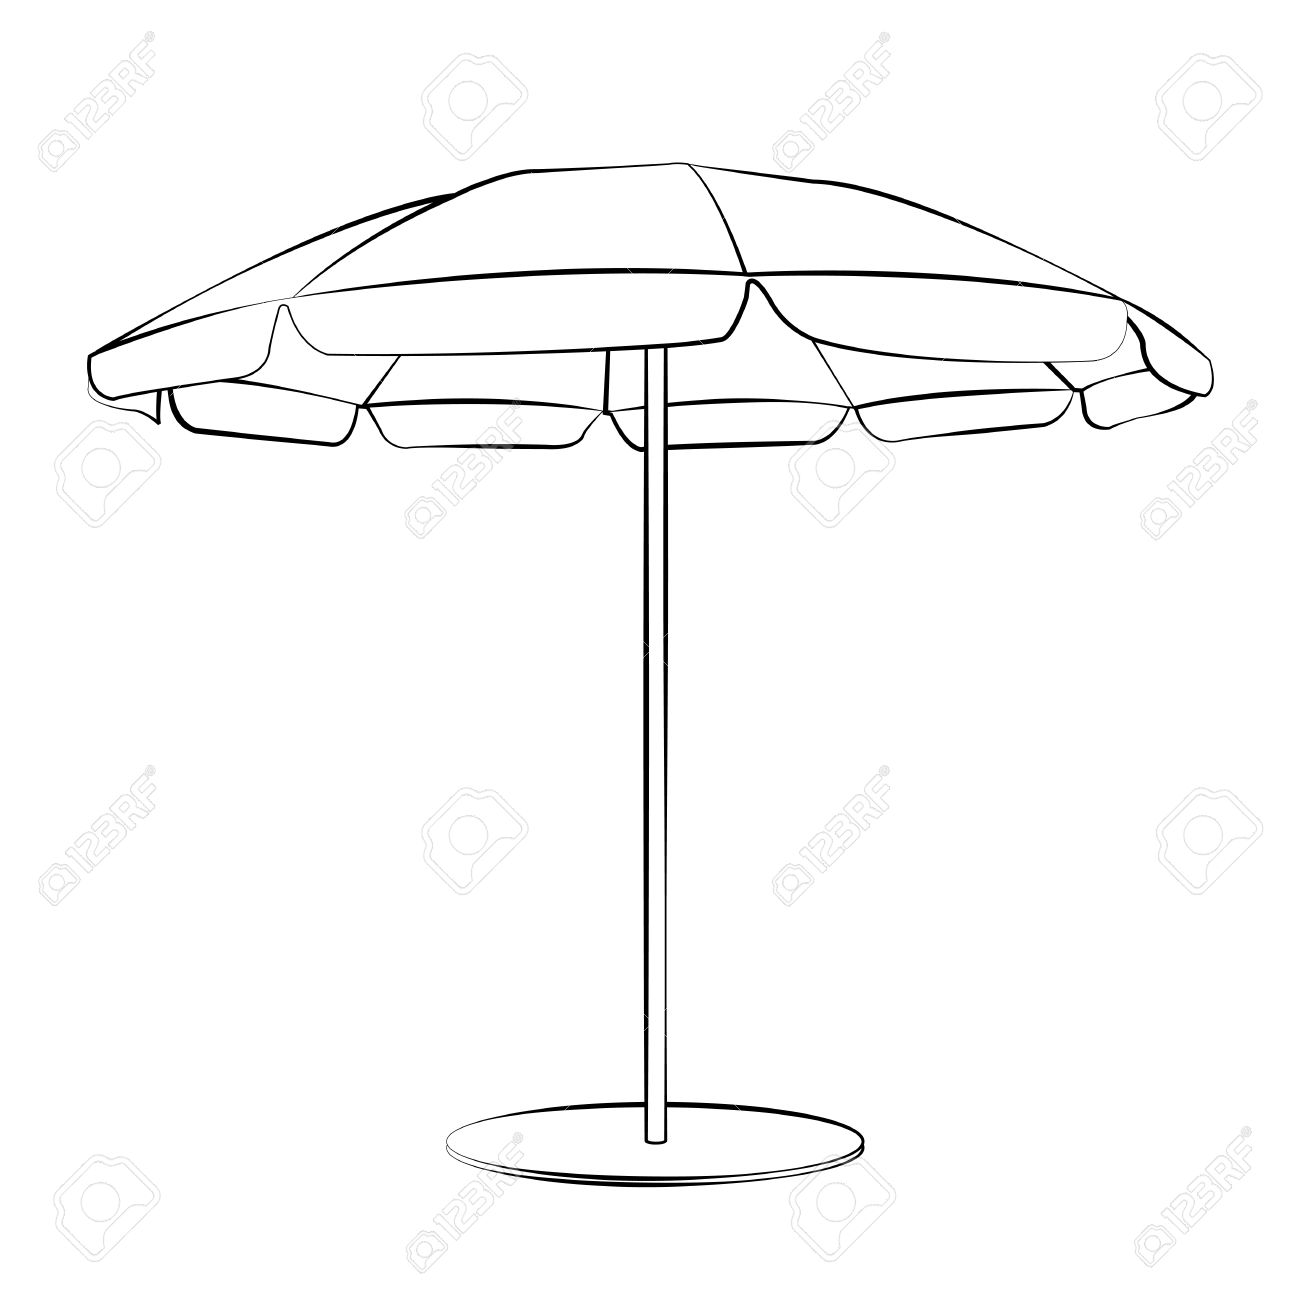 Beach umbrella clipart black and white